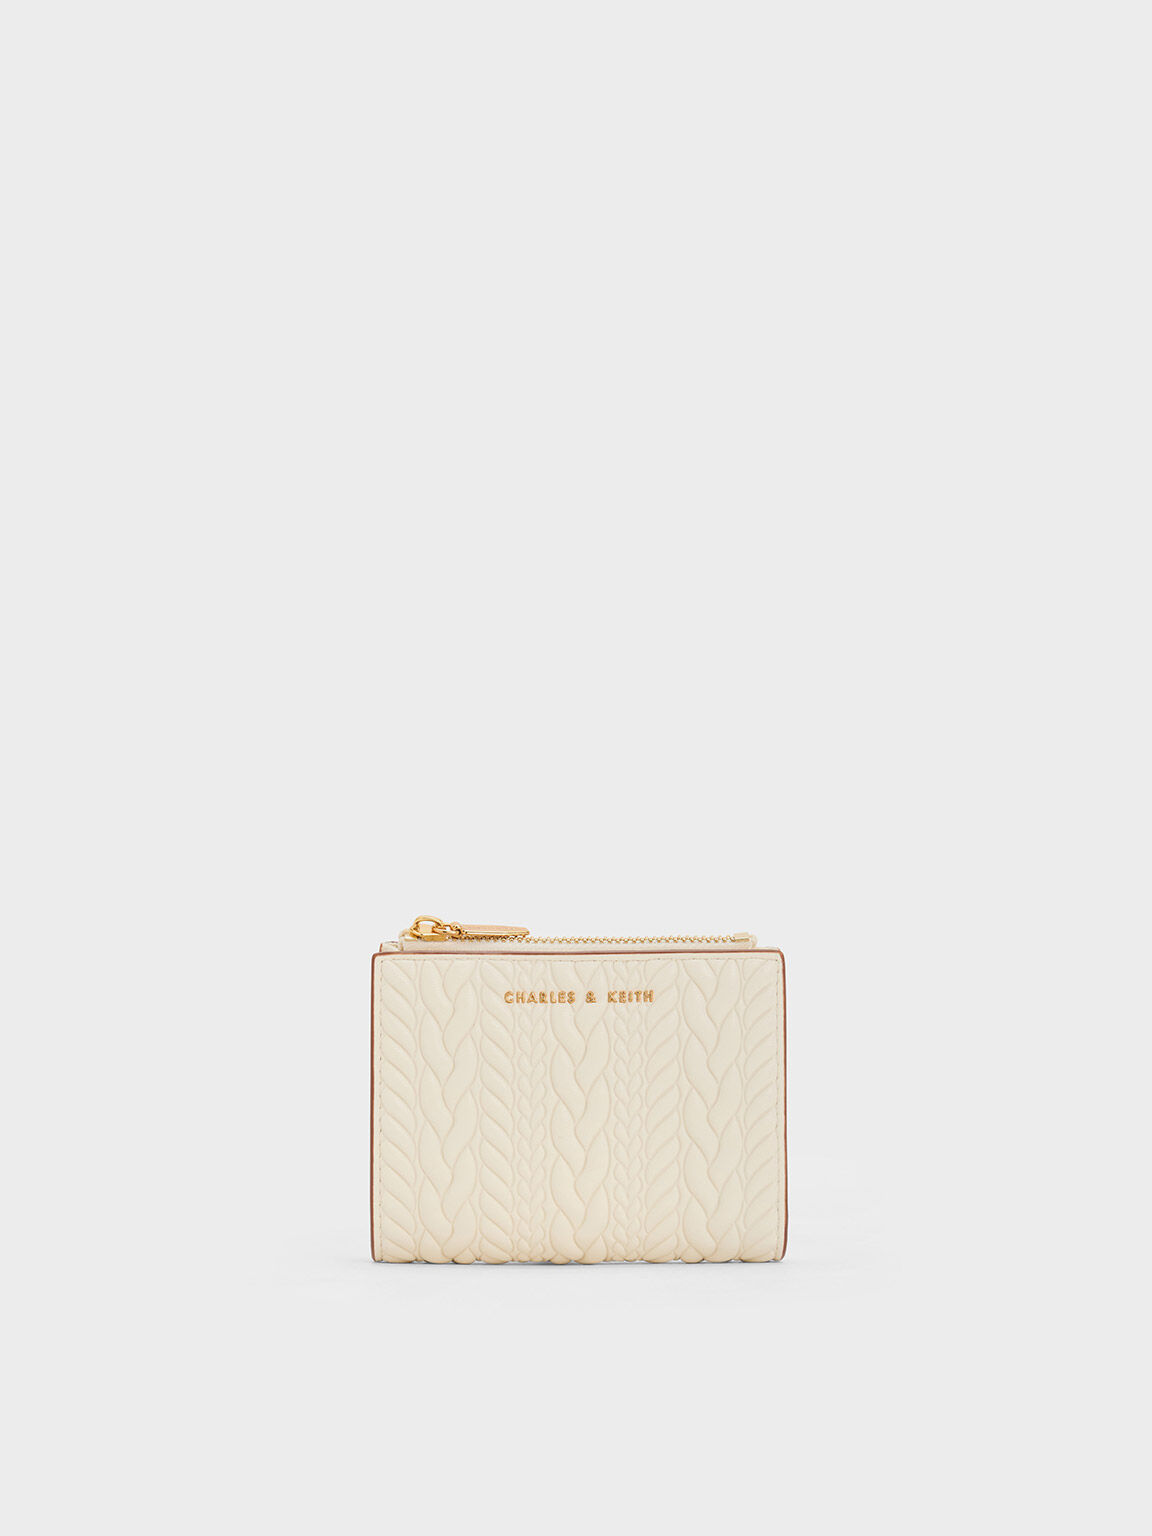 Louis Vuitton [Japan Only] Zippy Wallet, White, One Size